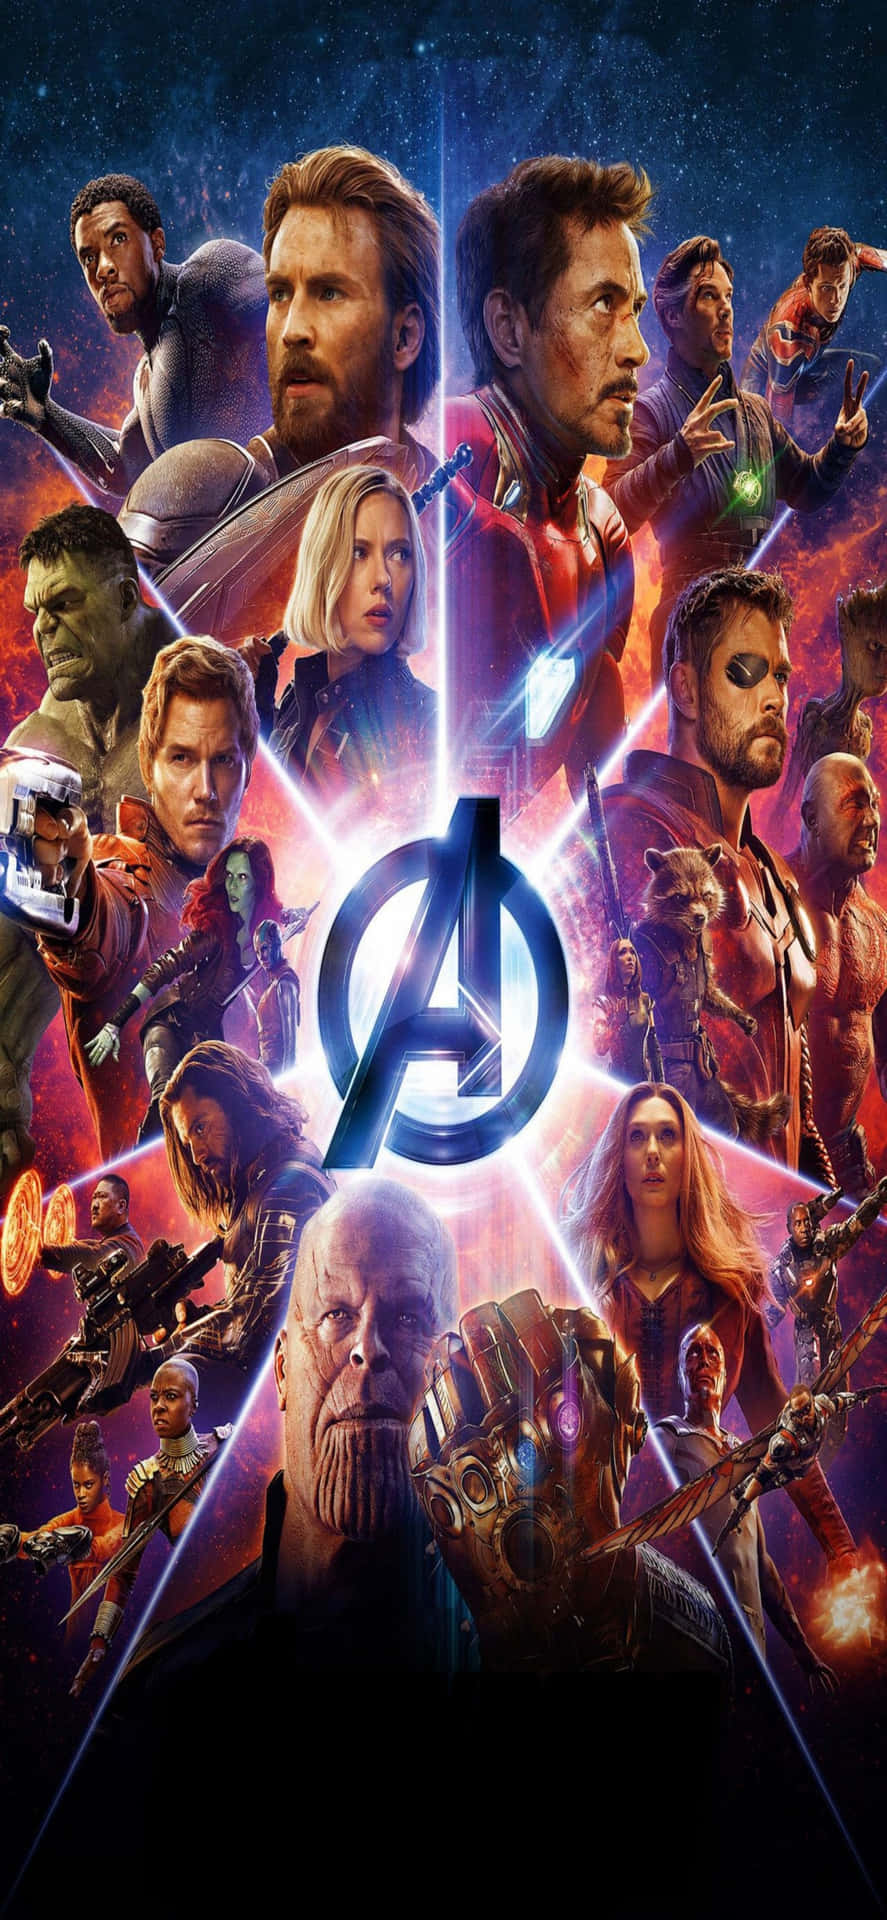 Marvel's Avengers Unite With iPhone Xs